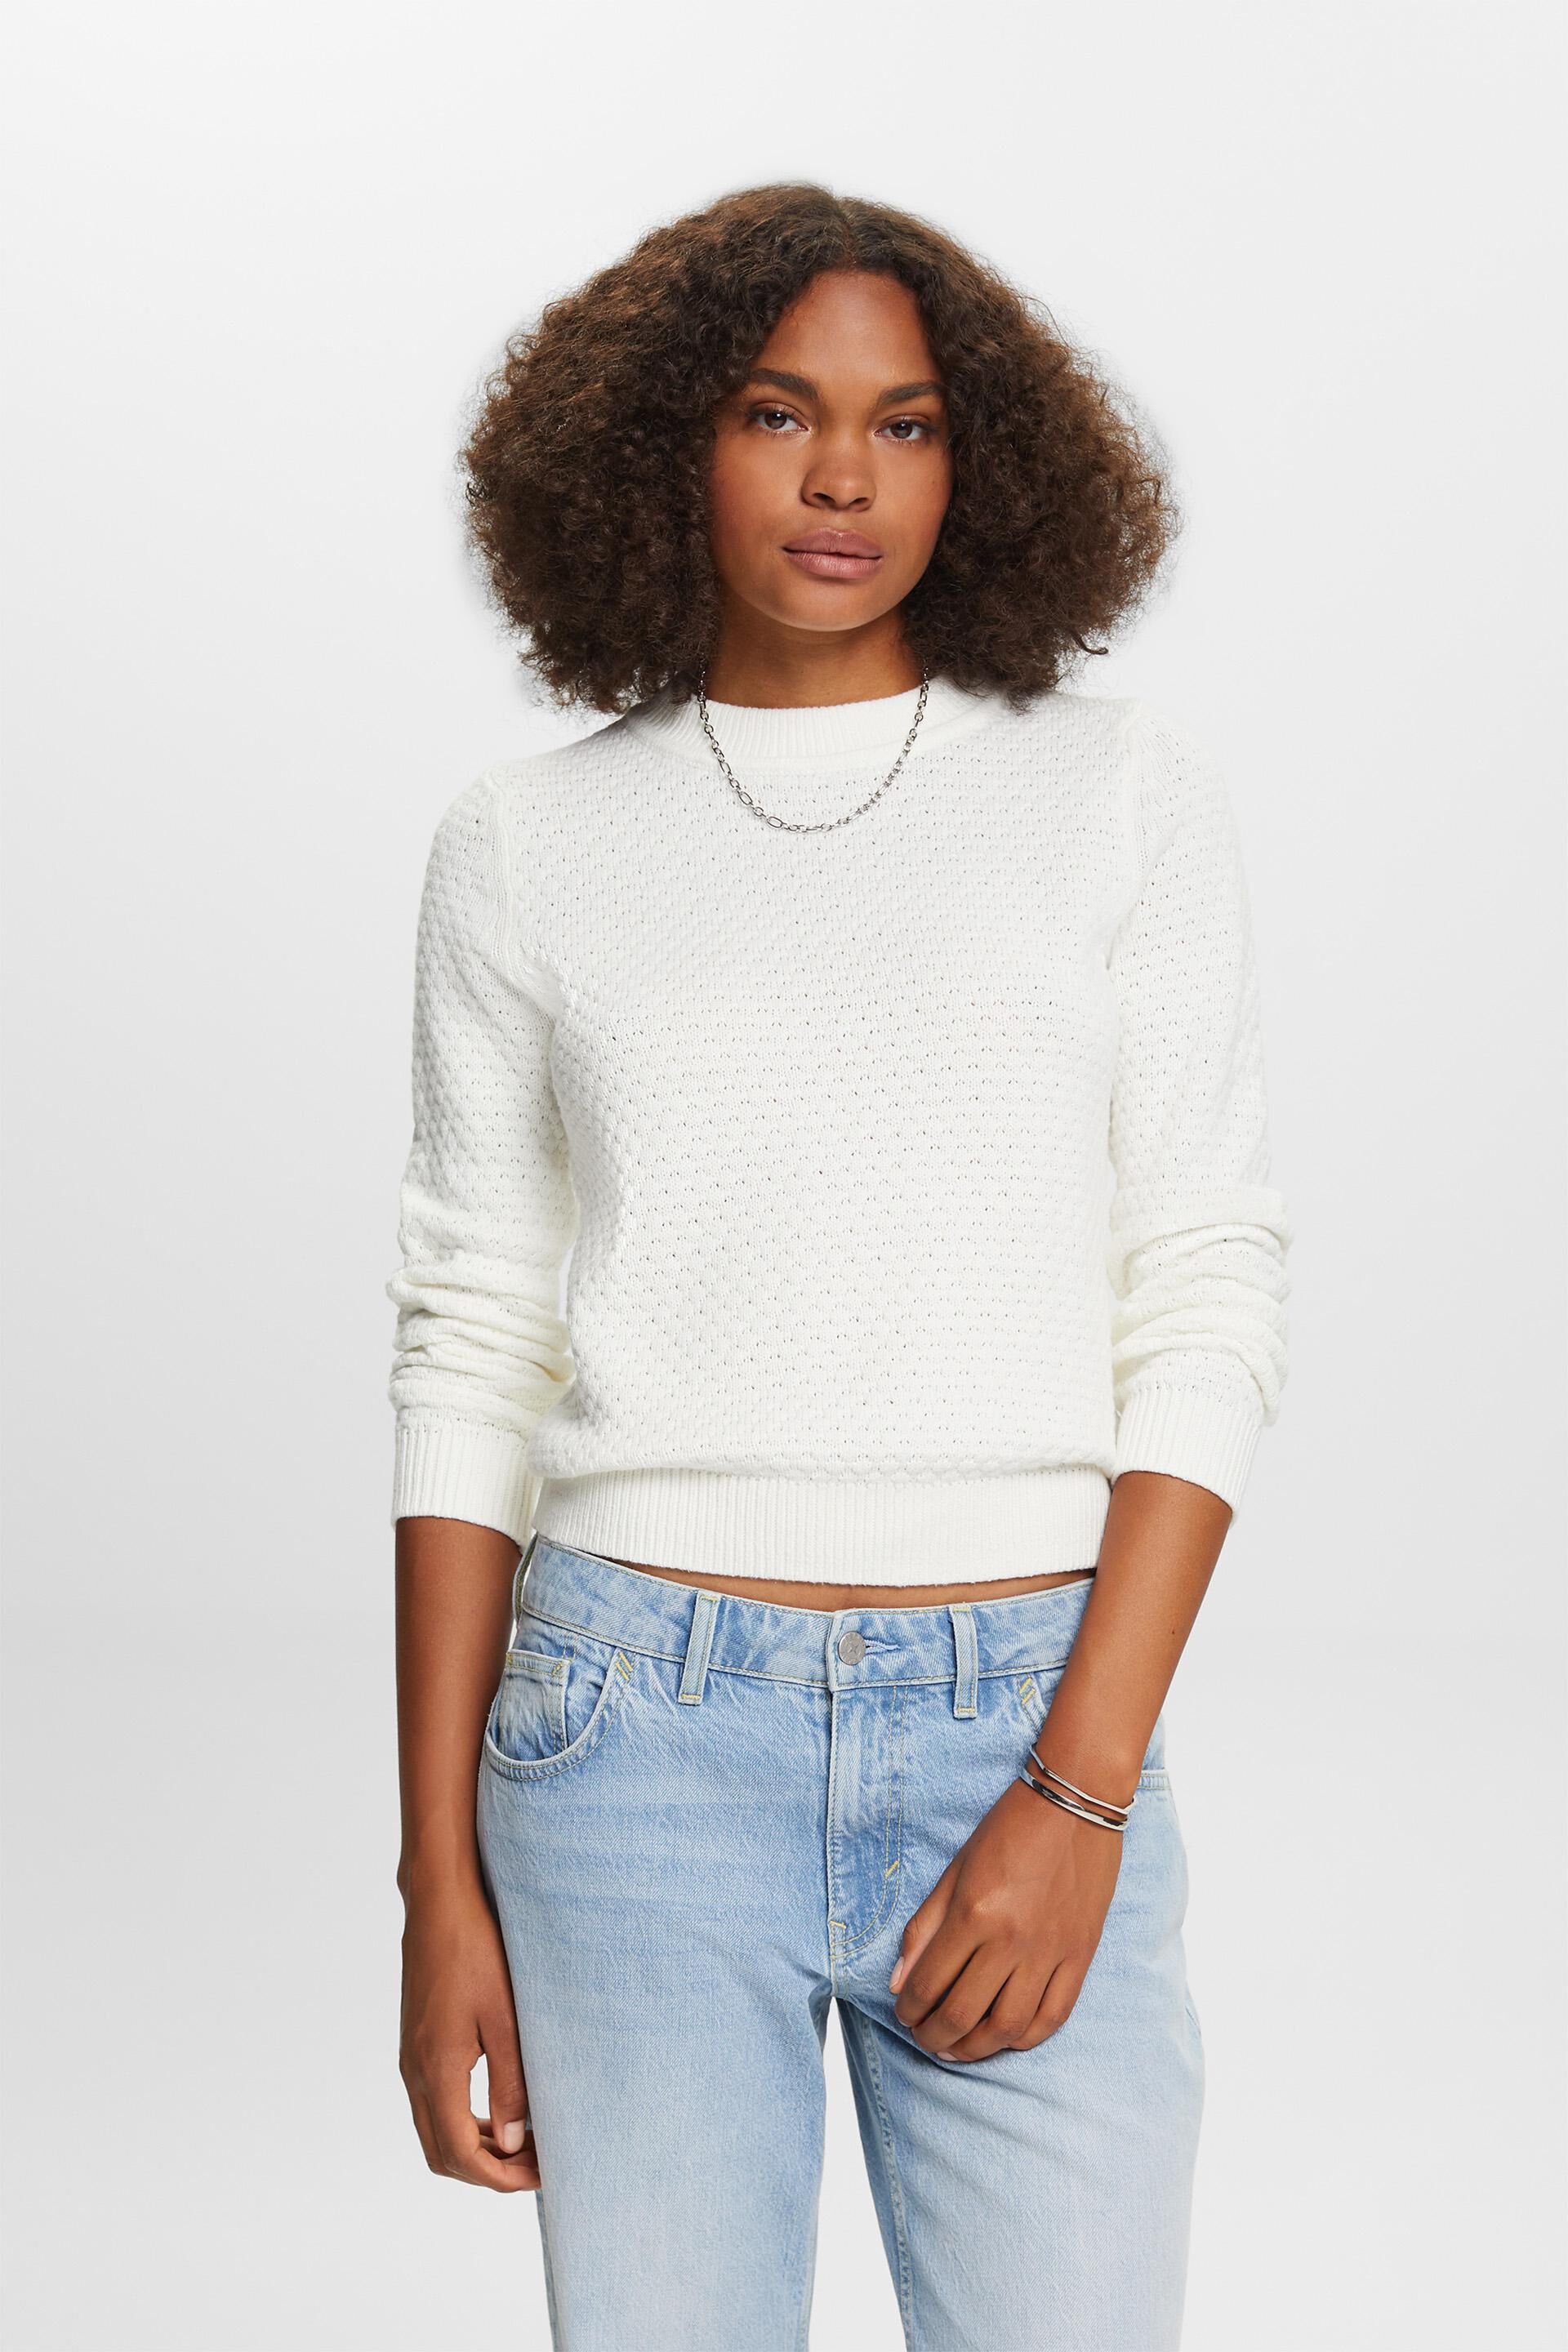 Esprit jumper, cotton blend Textured knit